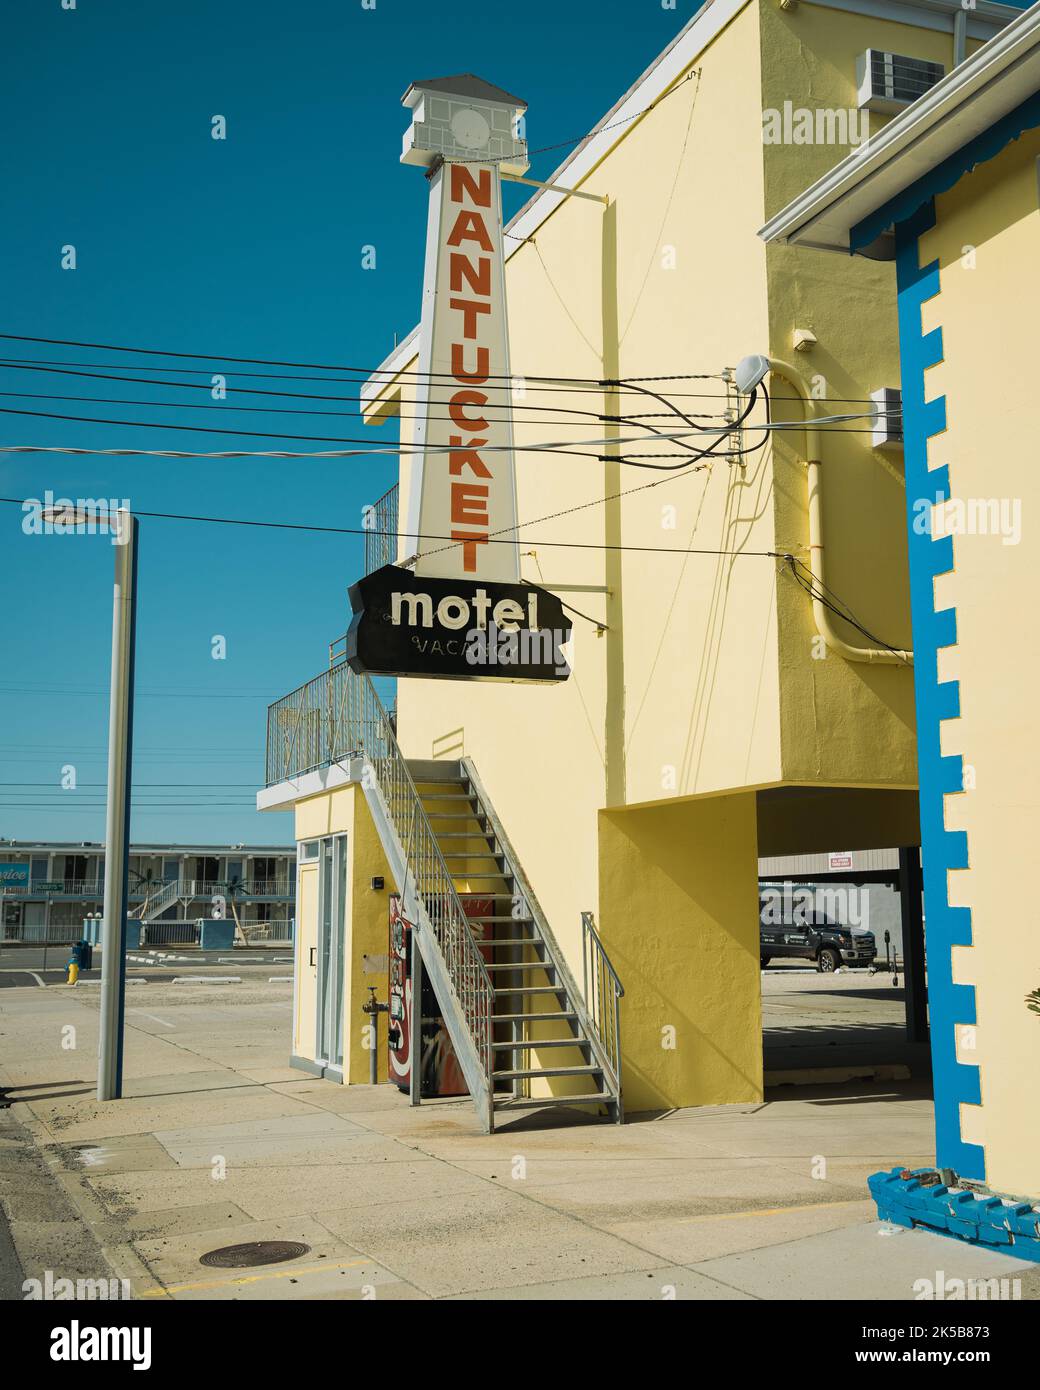 Nantucket Motel vintage sign, Wildwood, New Jersey Stock Photo